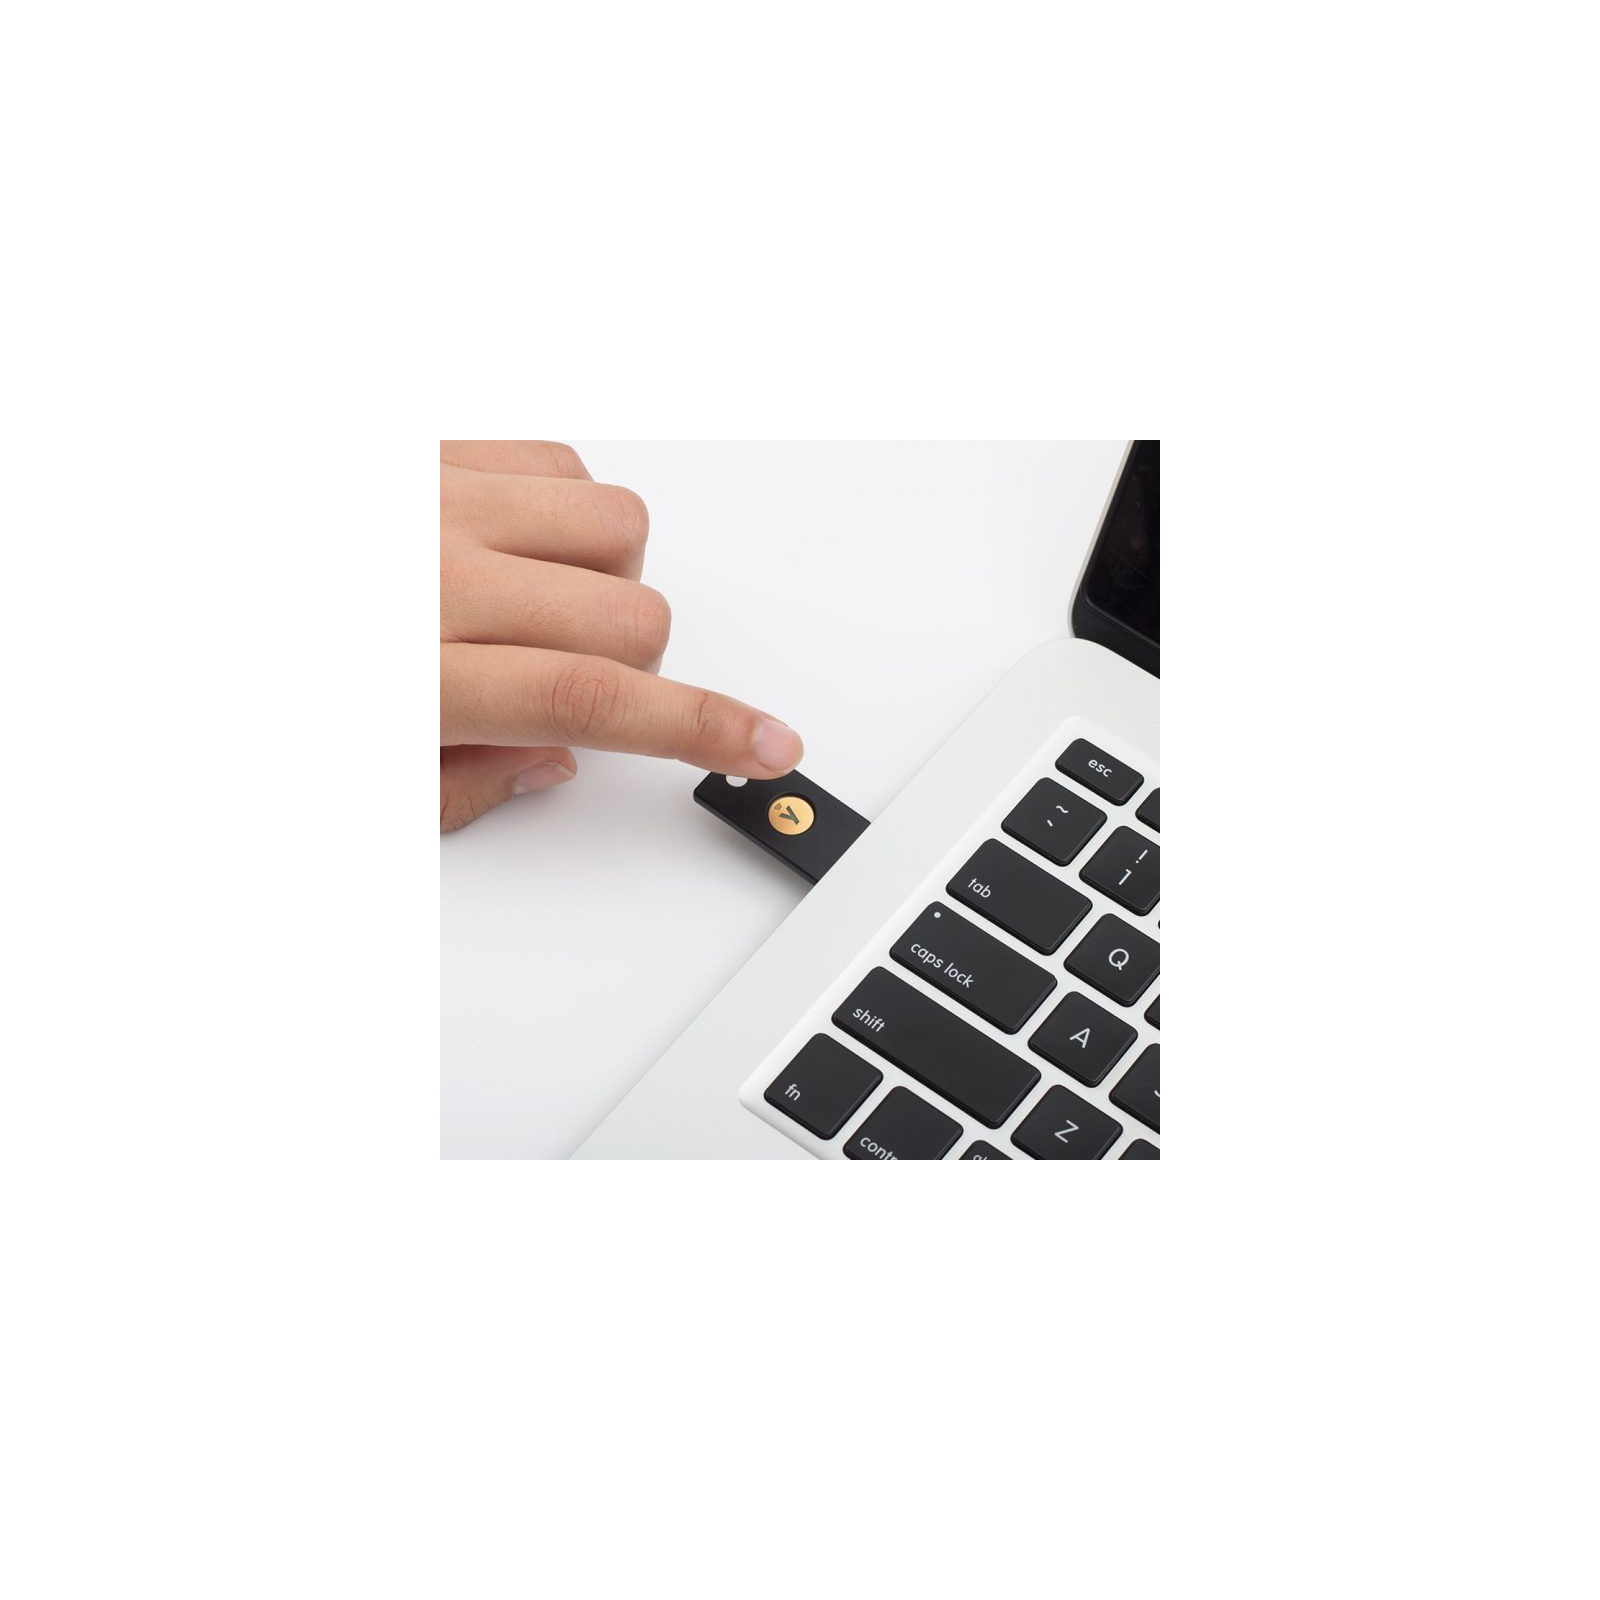 Апаратний ключ безпеки Yubico YubiKey 5 NFC (YubiKey_5_NFC) зображення 3